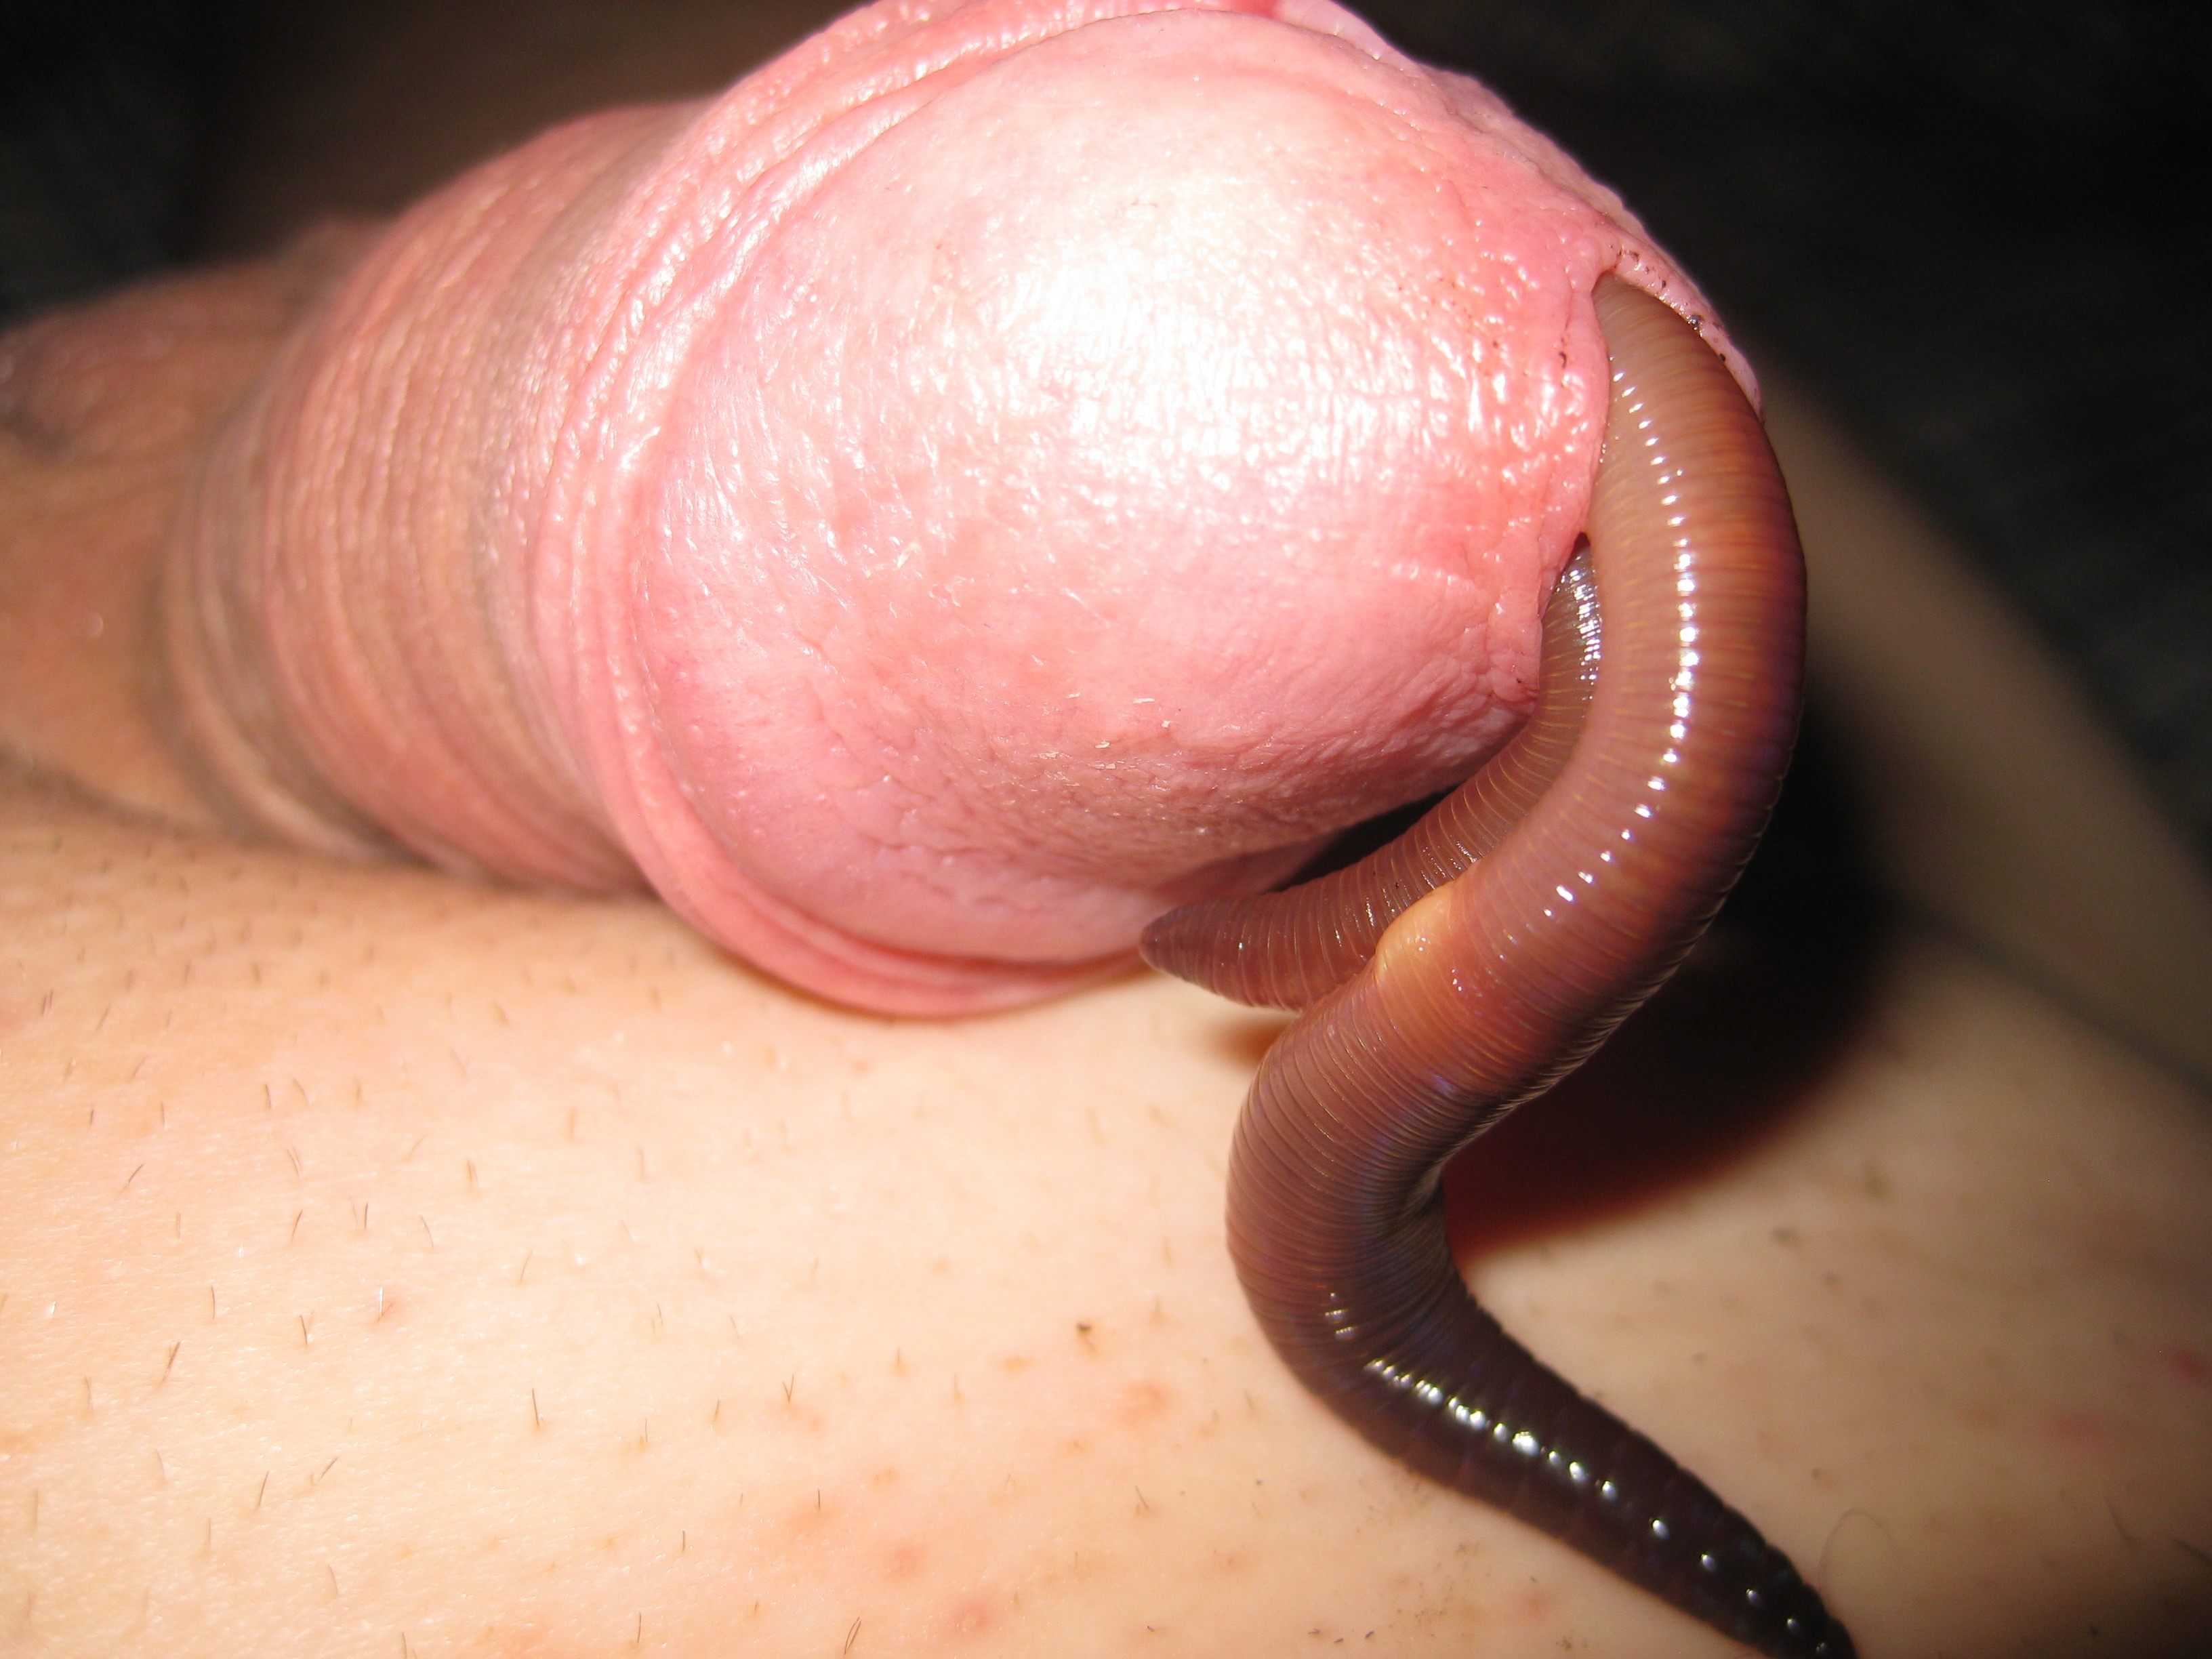 Worm inside urethra porn